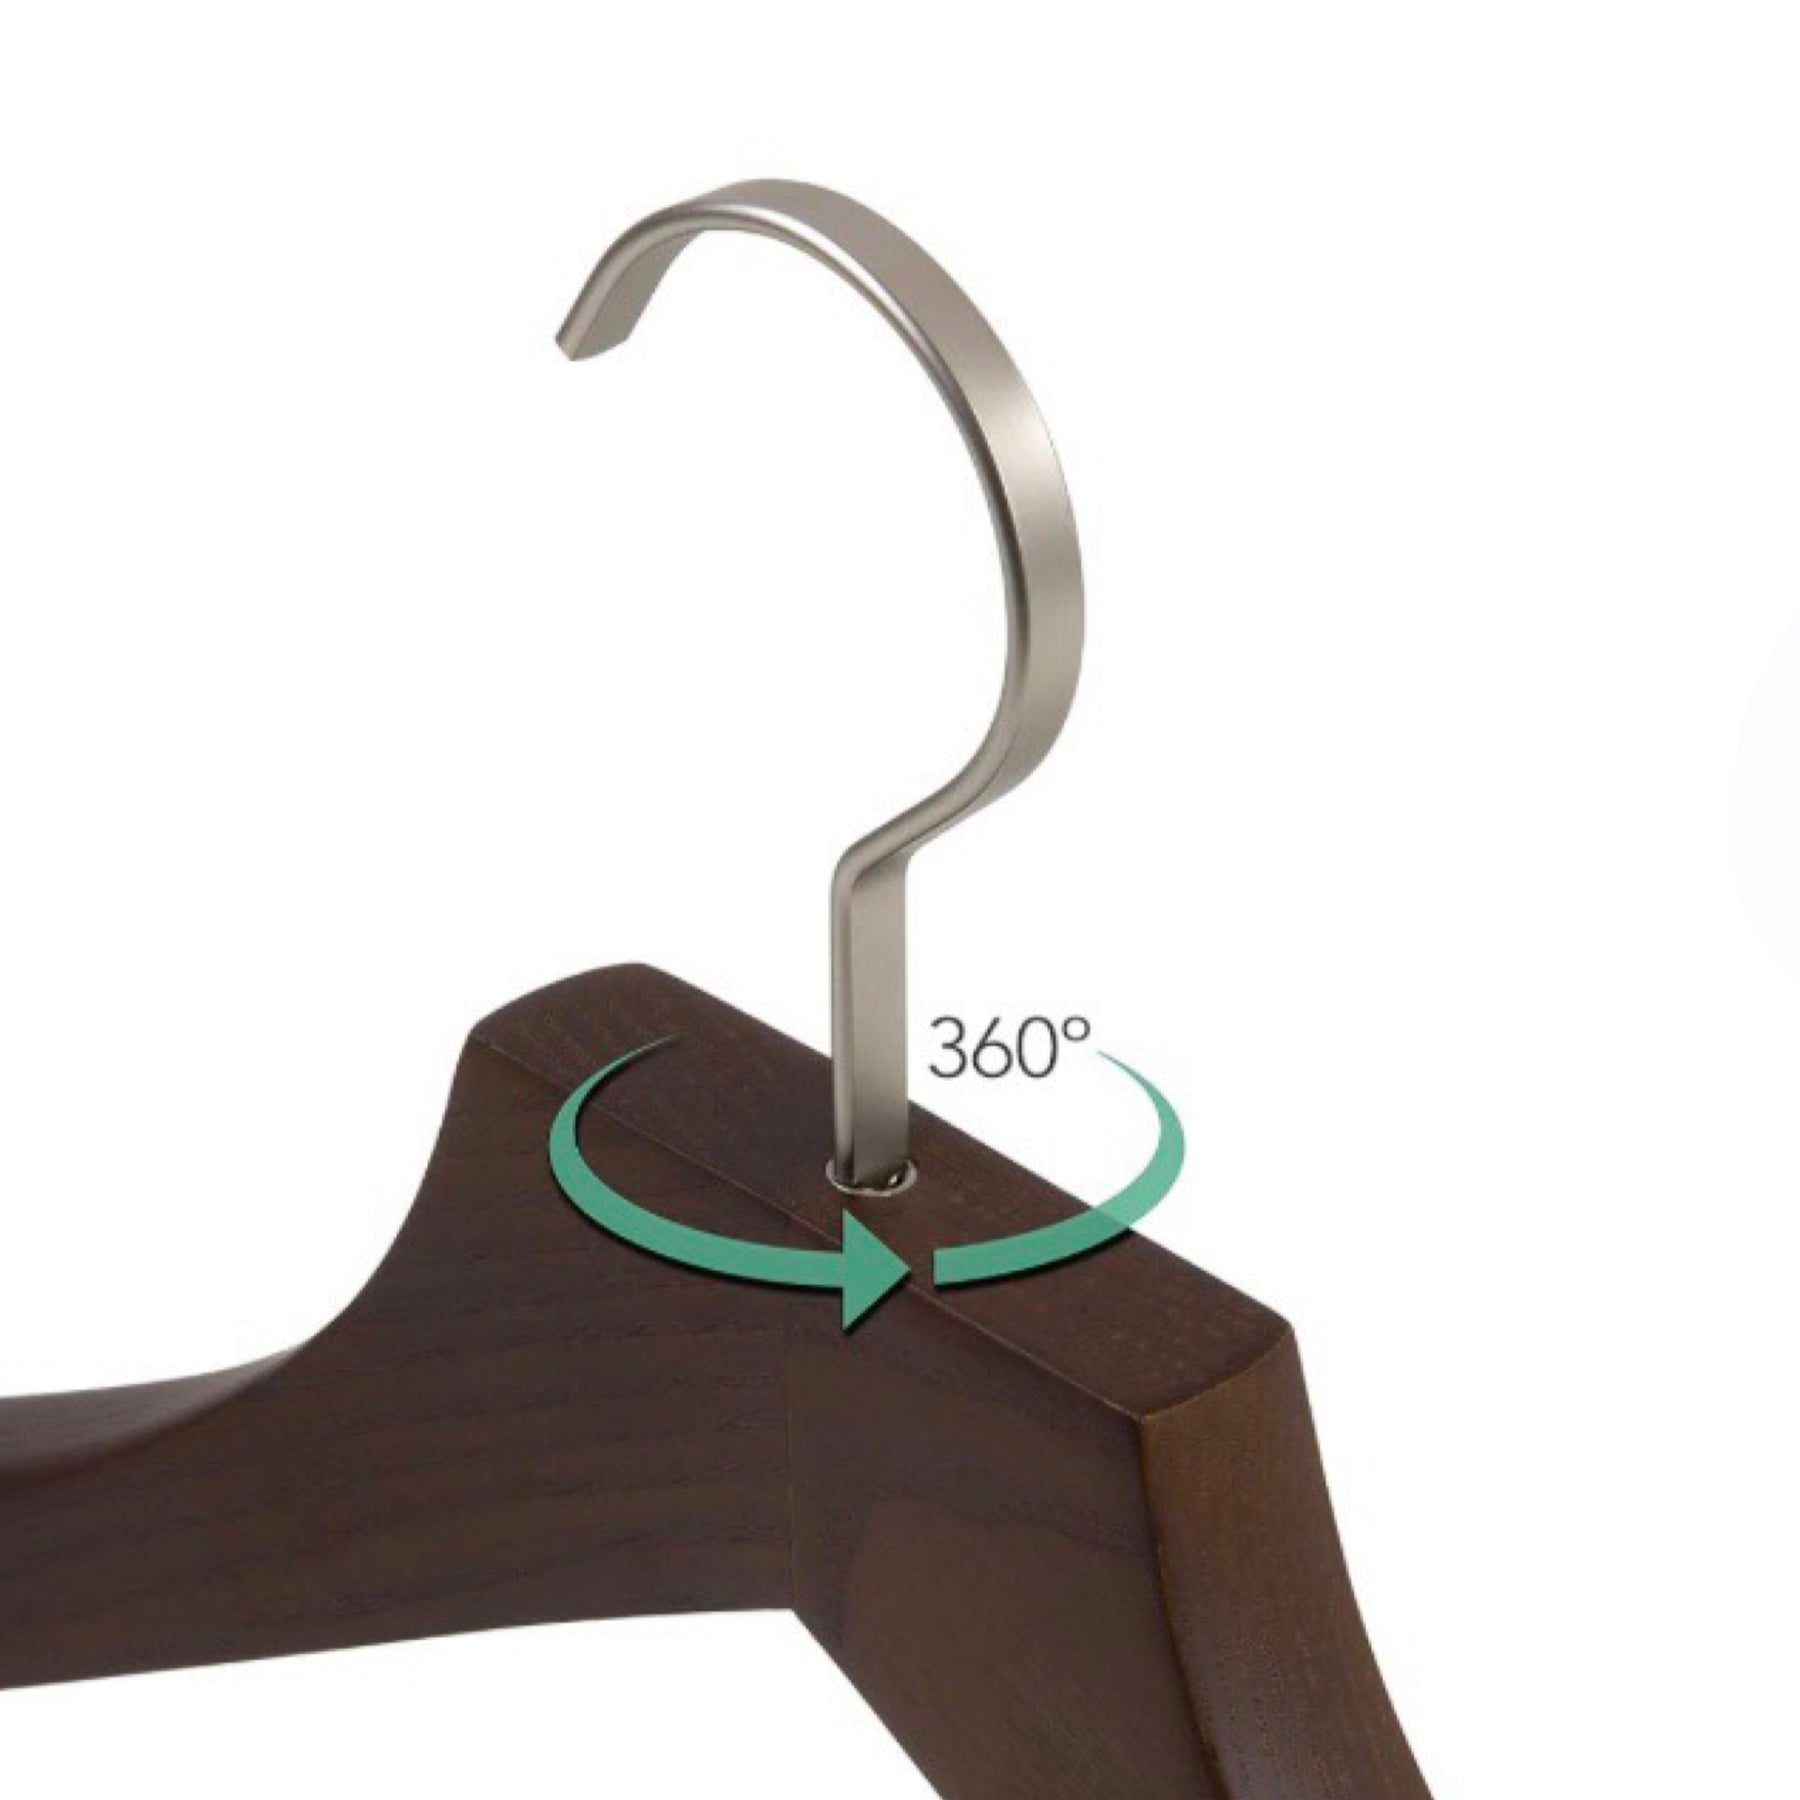 4pk Solid Ash Hardwood Coat Hangers W/Steel Swivel Hooks - Contoured Shoulders